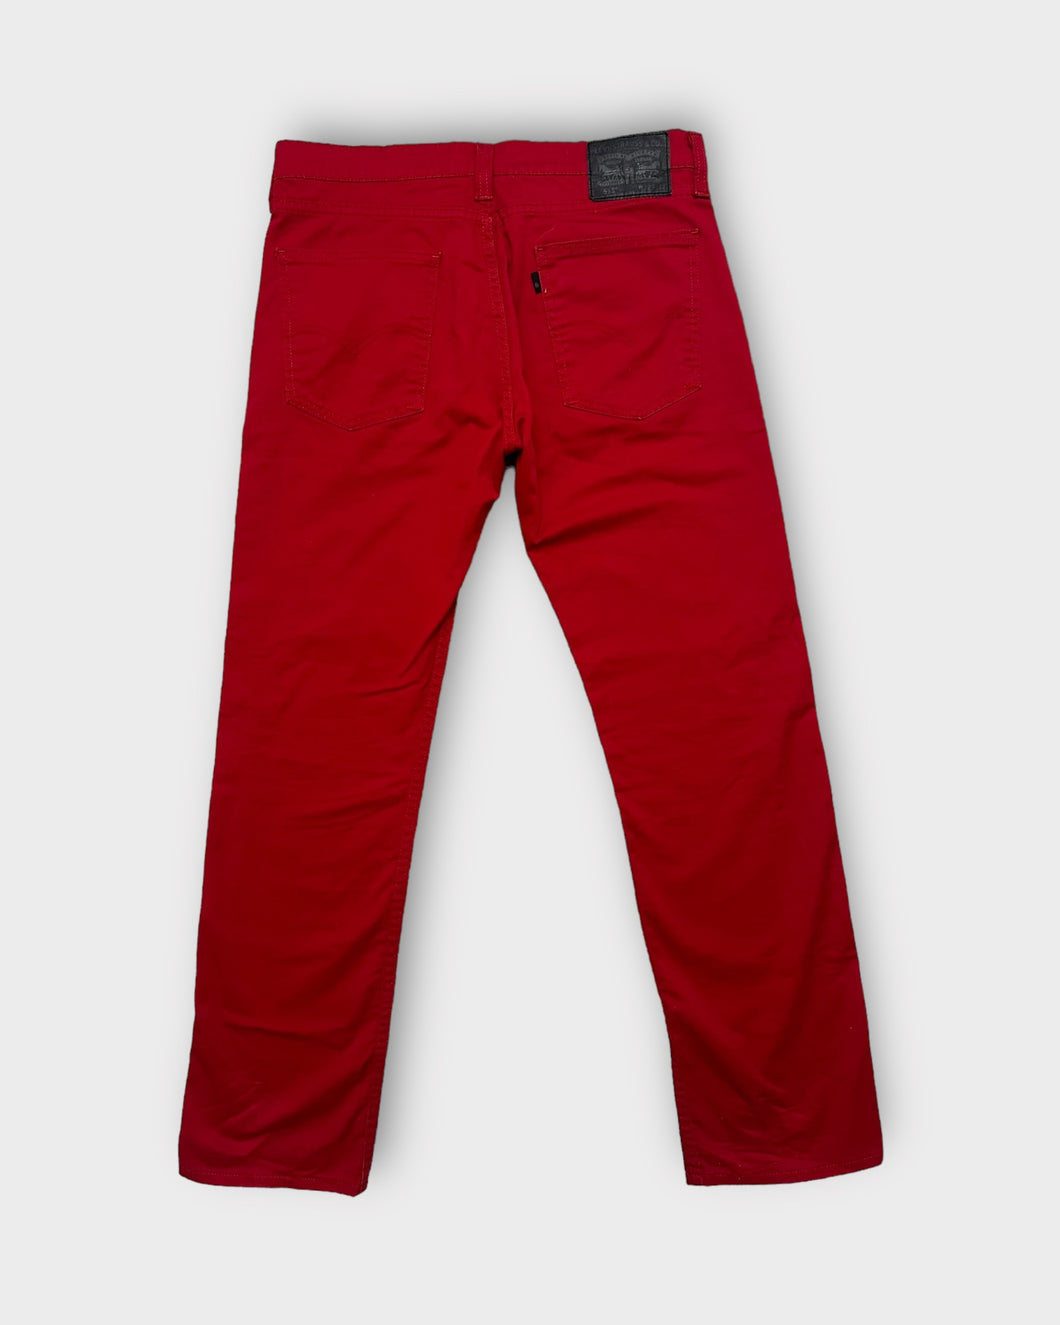 Levi Strauss & Co Red Slim Straight 513 Jeans (32w)